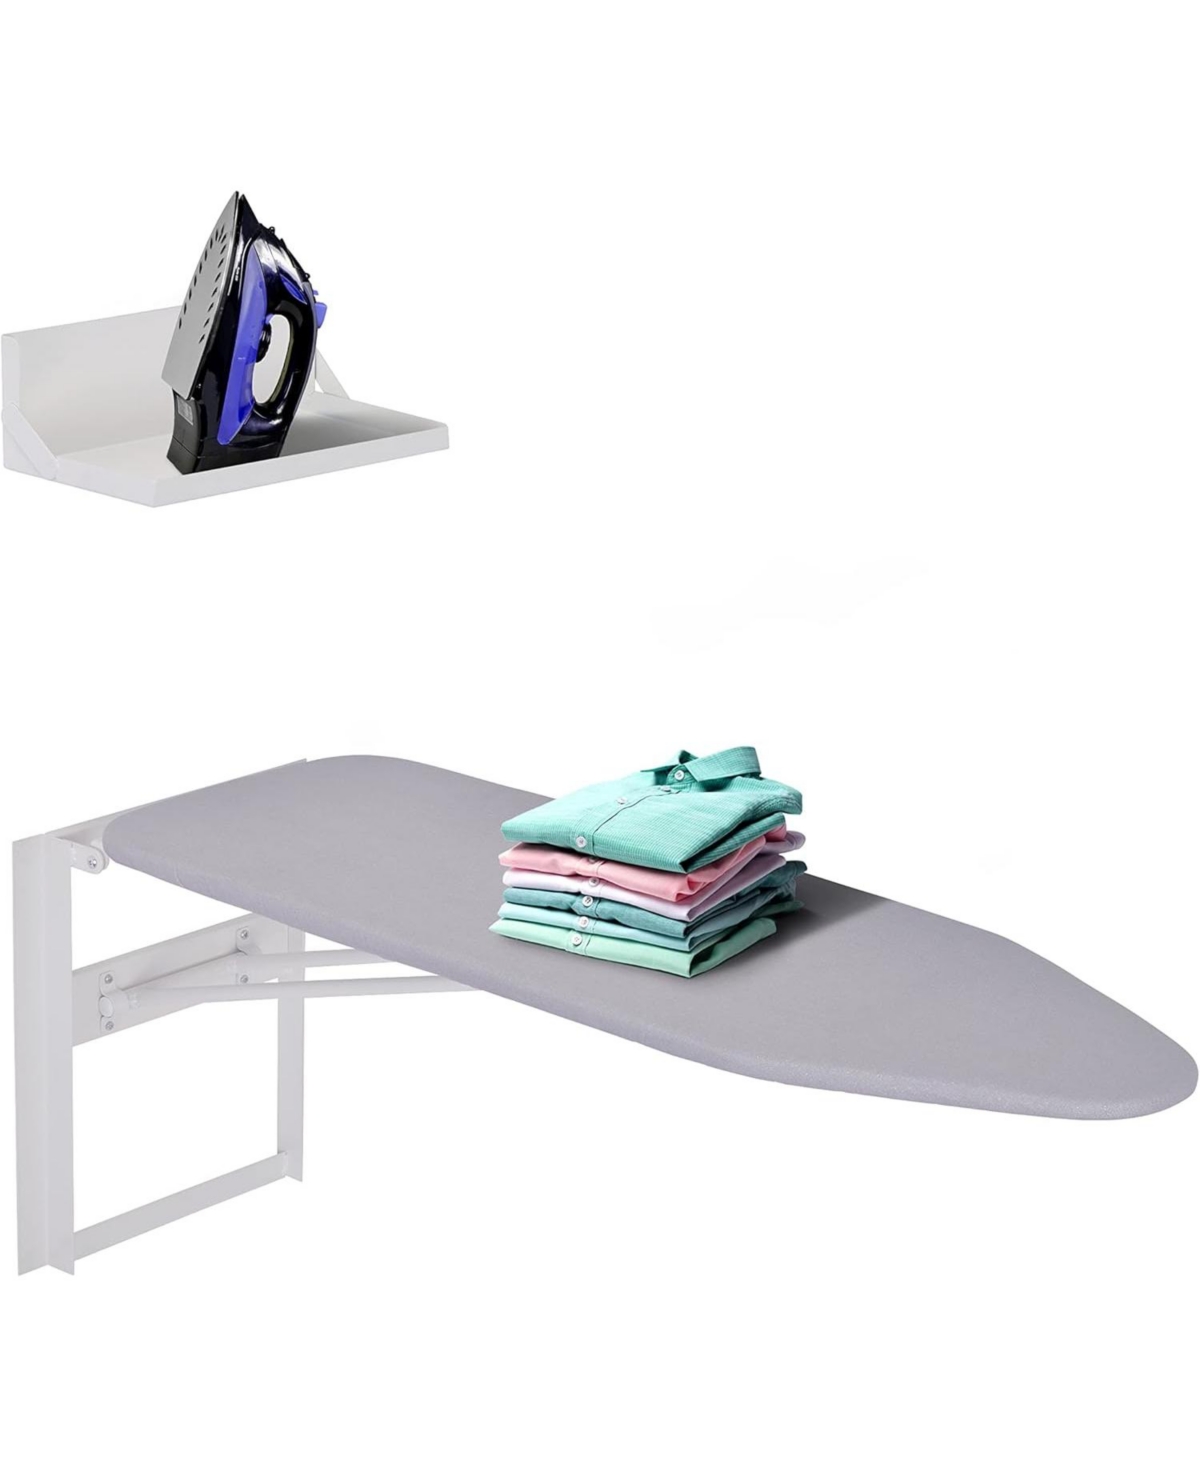 Ironing Board with Storage Shelf, Wall Mount Ironing Board - White